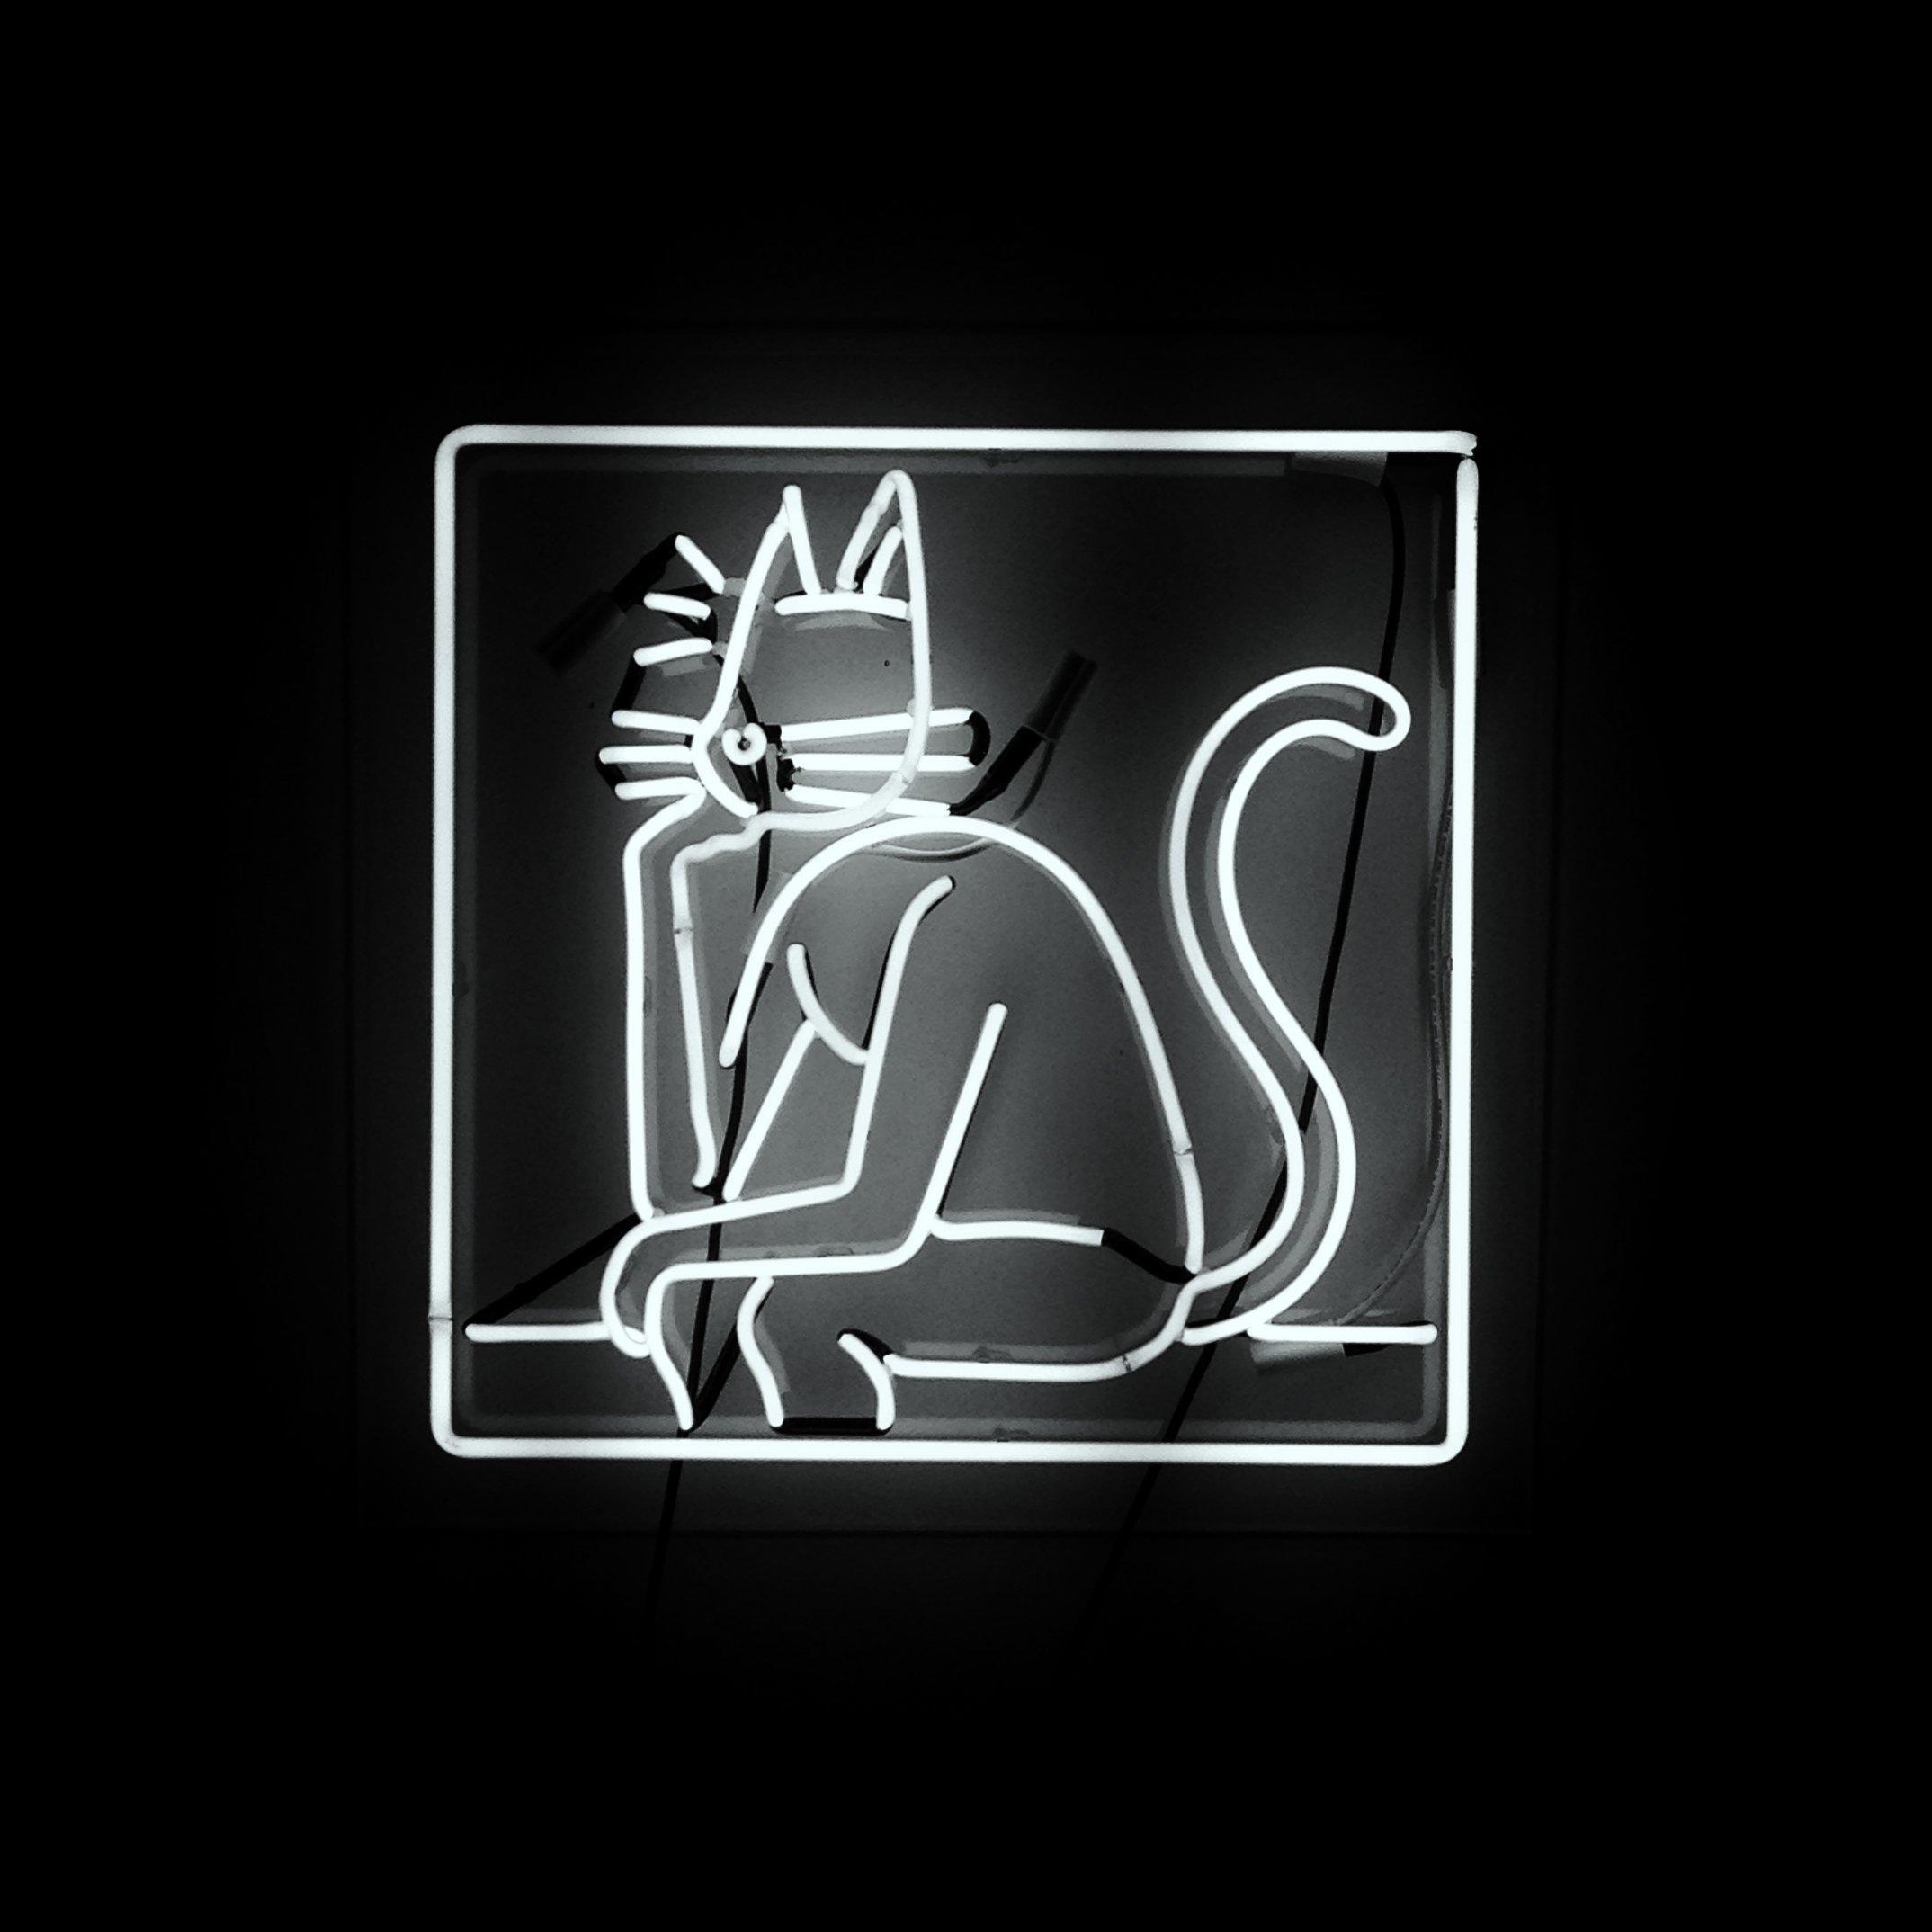 Lost Cat™ neon sign branding identity design by Maximillian Piras